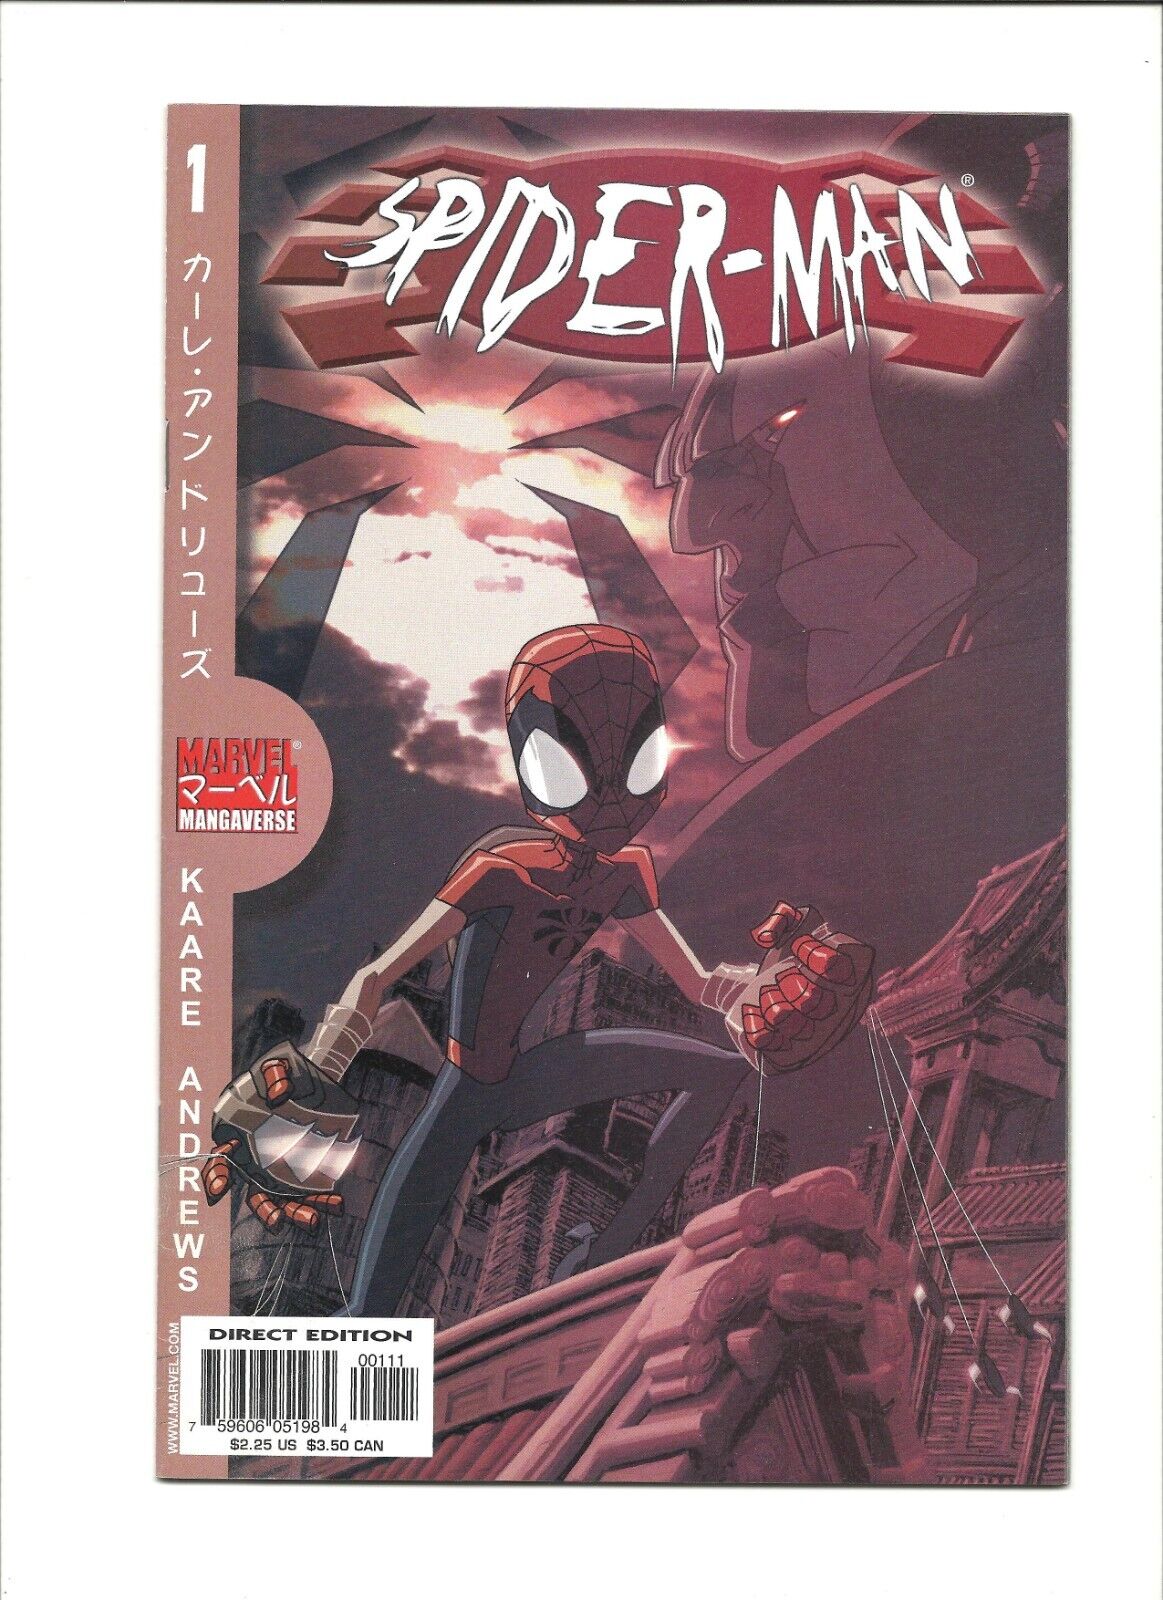 Marvel Mangaverse Spider-man # 1 Marvel Comics (2002) 1st app Manga Spider-man